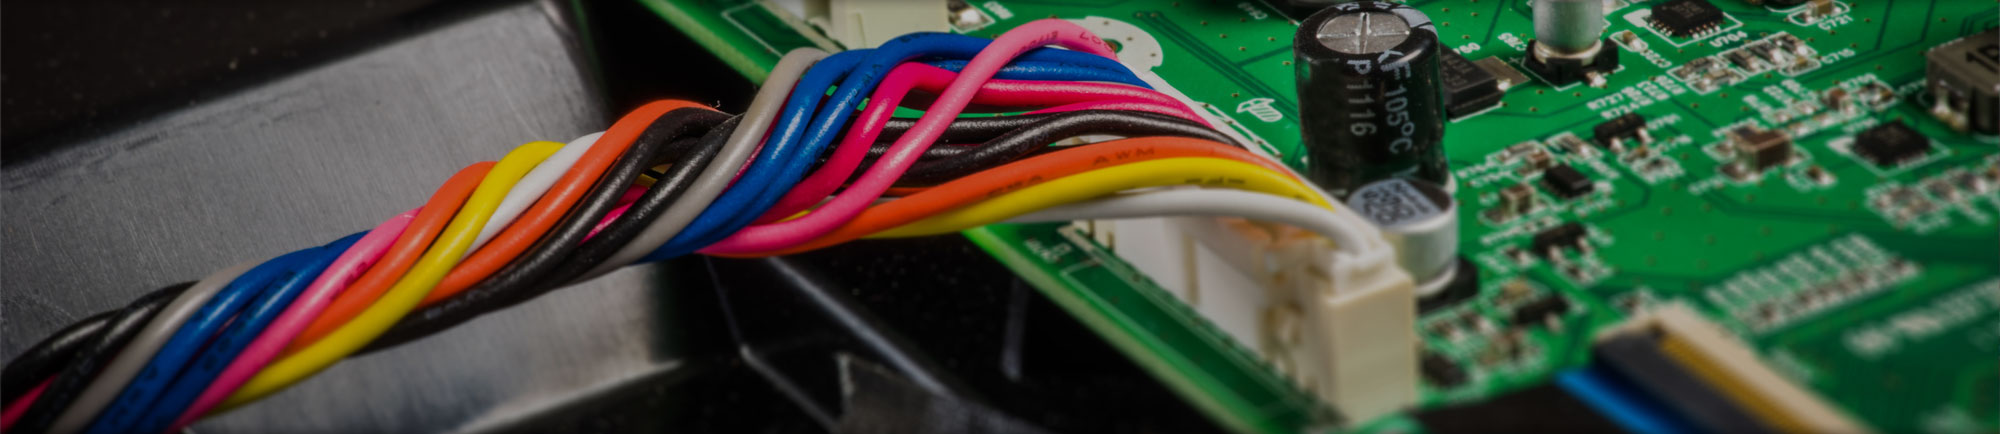 Wires plugged into printed circuit board in Farmington Hills, MI. 